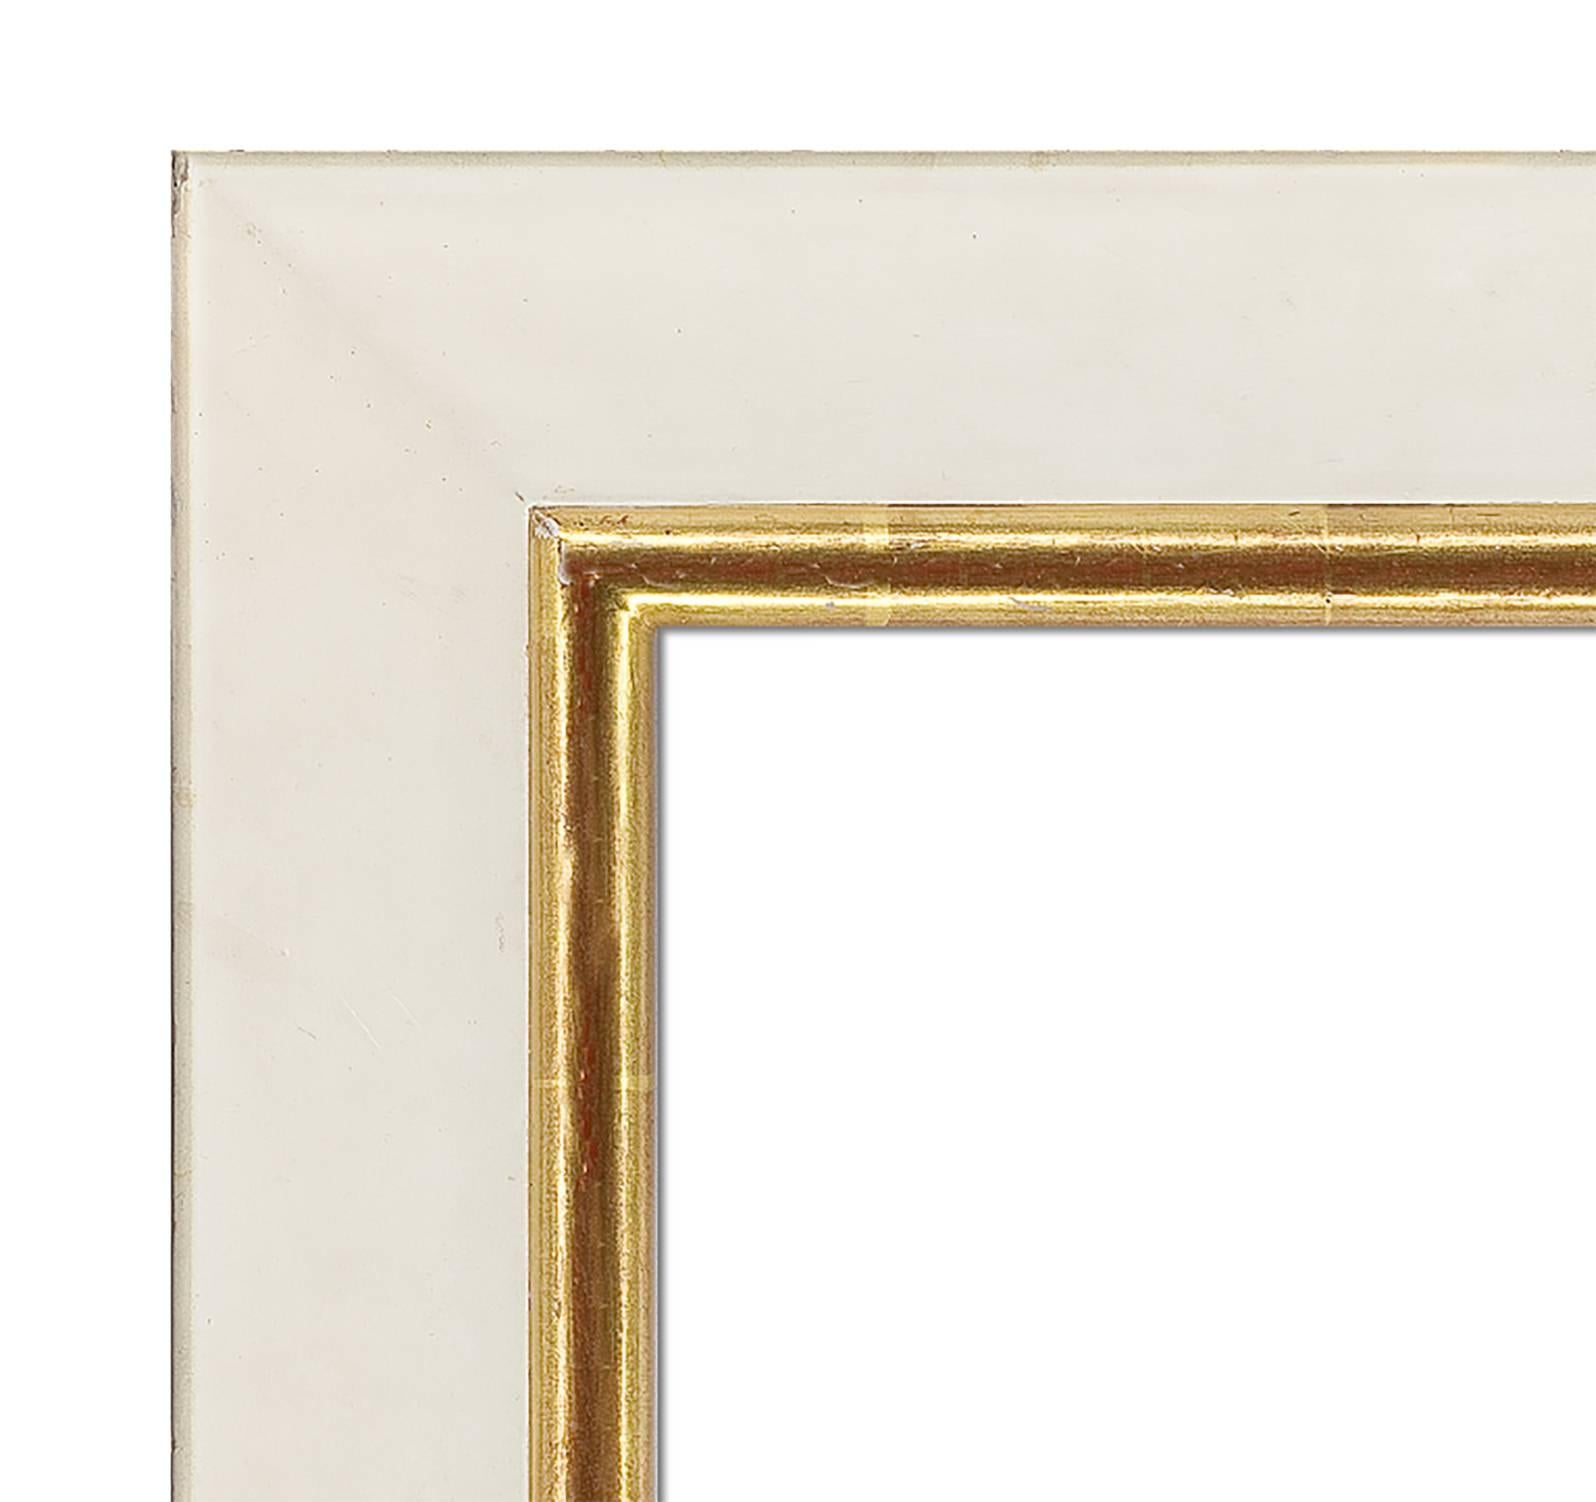 Contemporary handmade gilt and lacquer mirror. Measures: 30